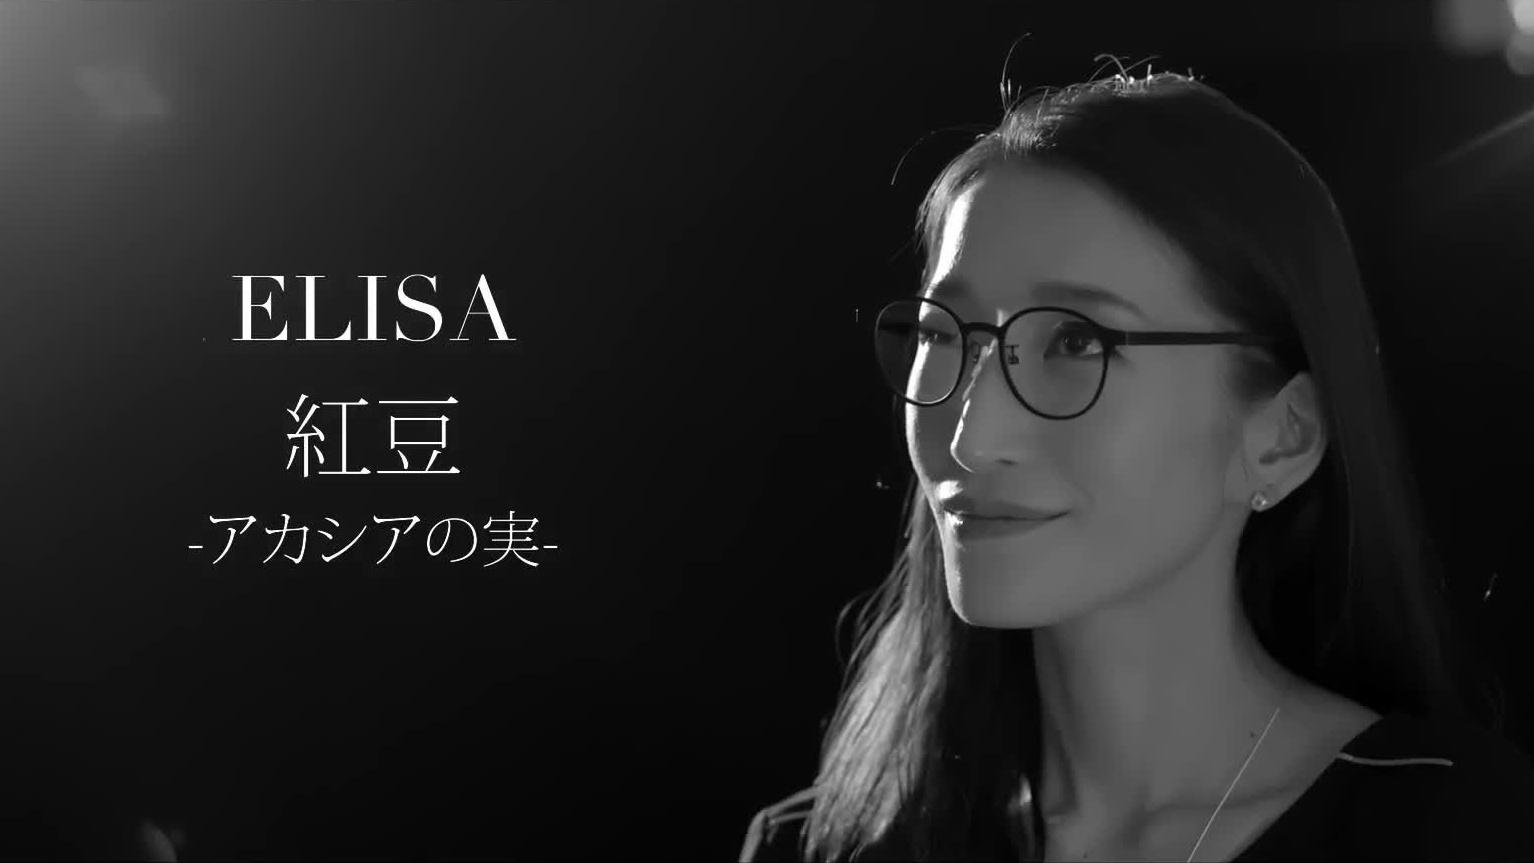 ELISA - 紅豆 -アカシアの実- (Short Ver.)